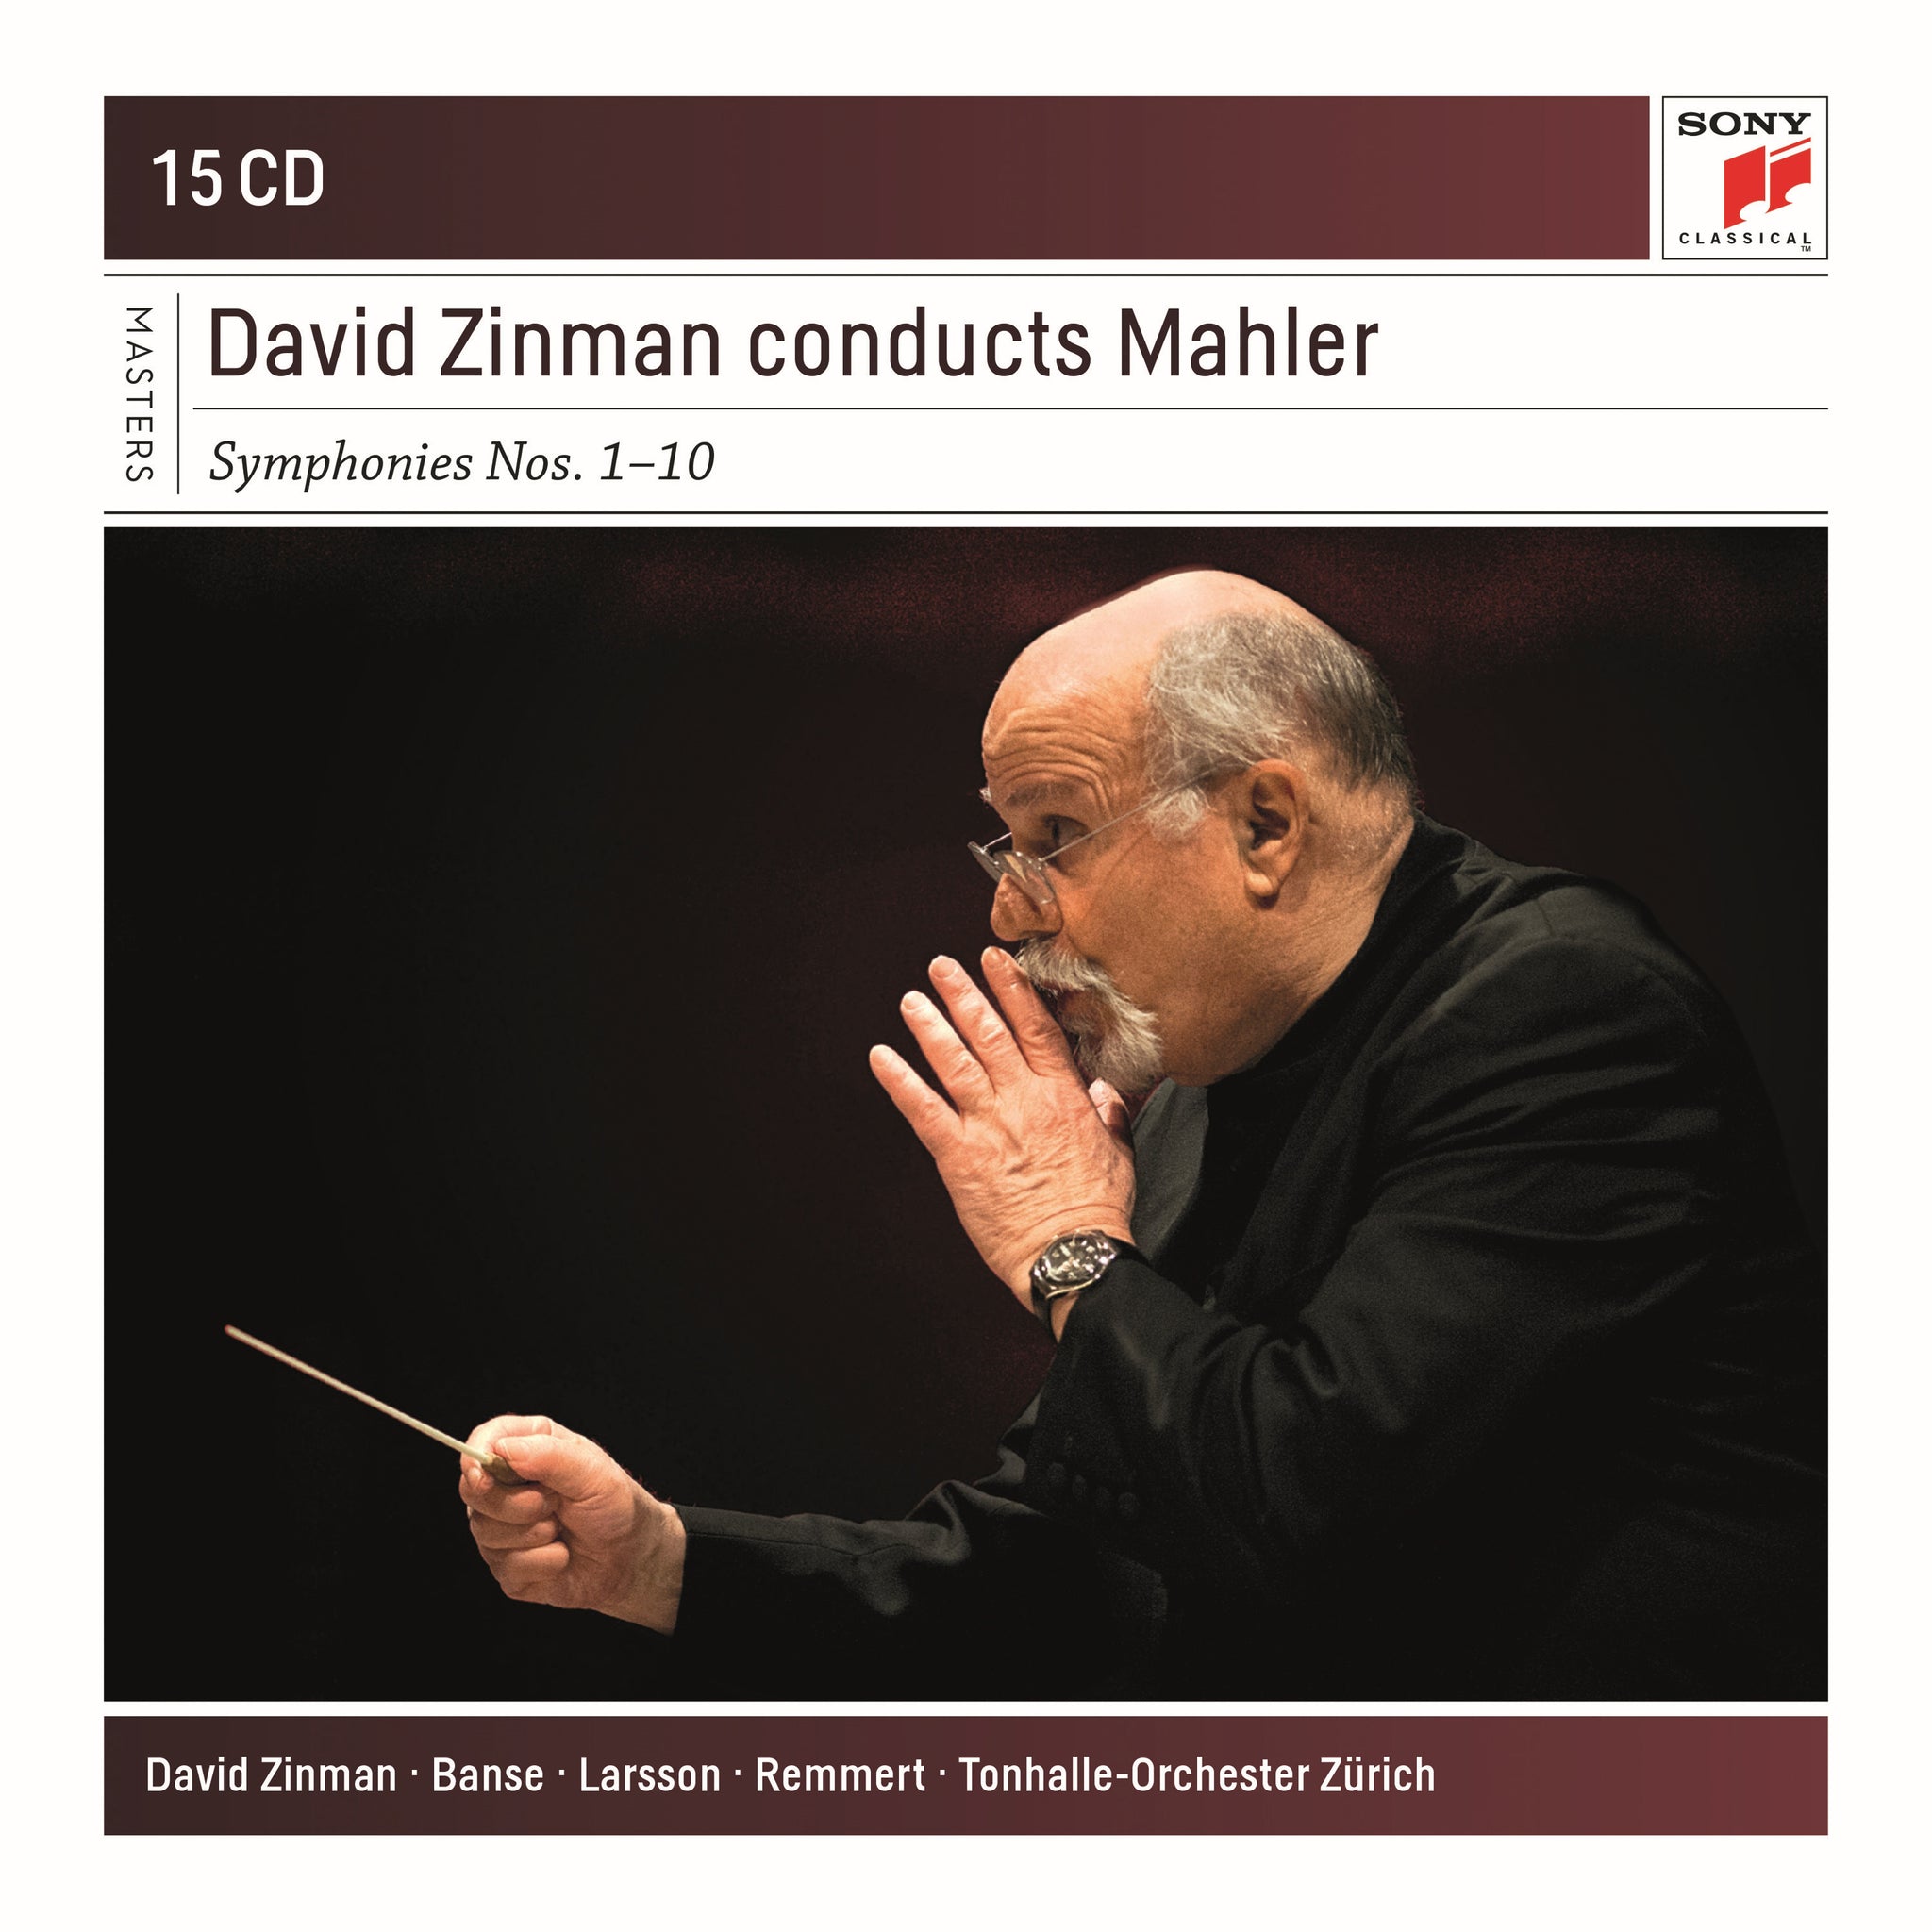 David Zinman conducts Mahler Symphonies Nos. 1-10